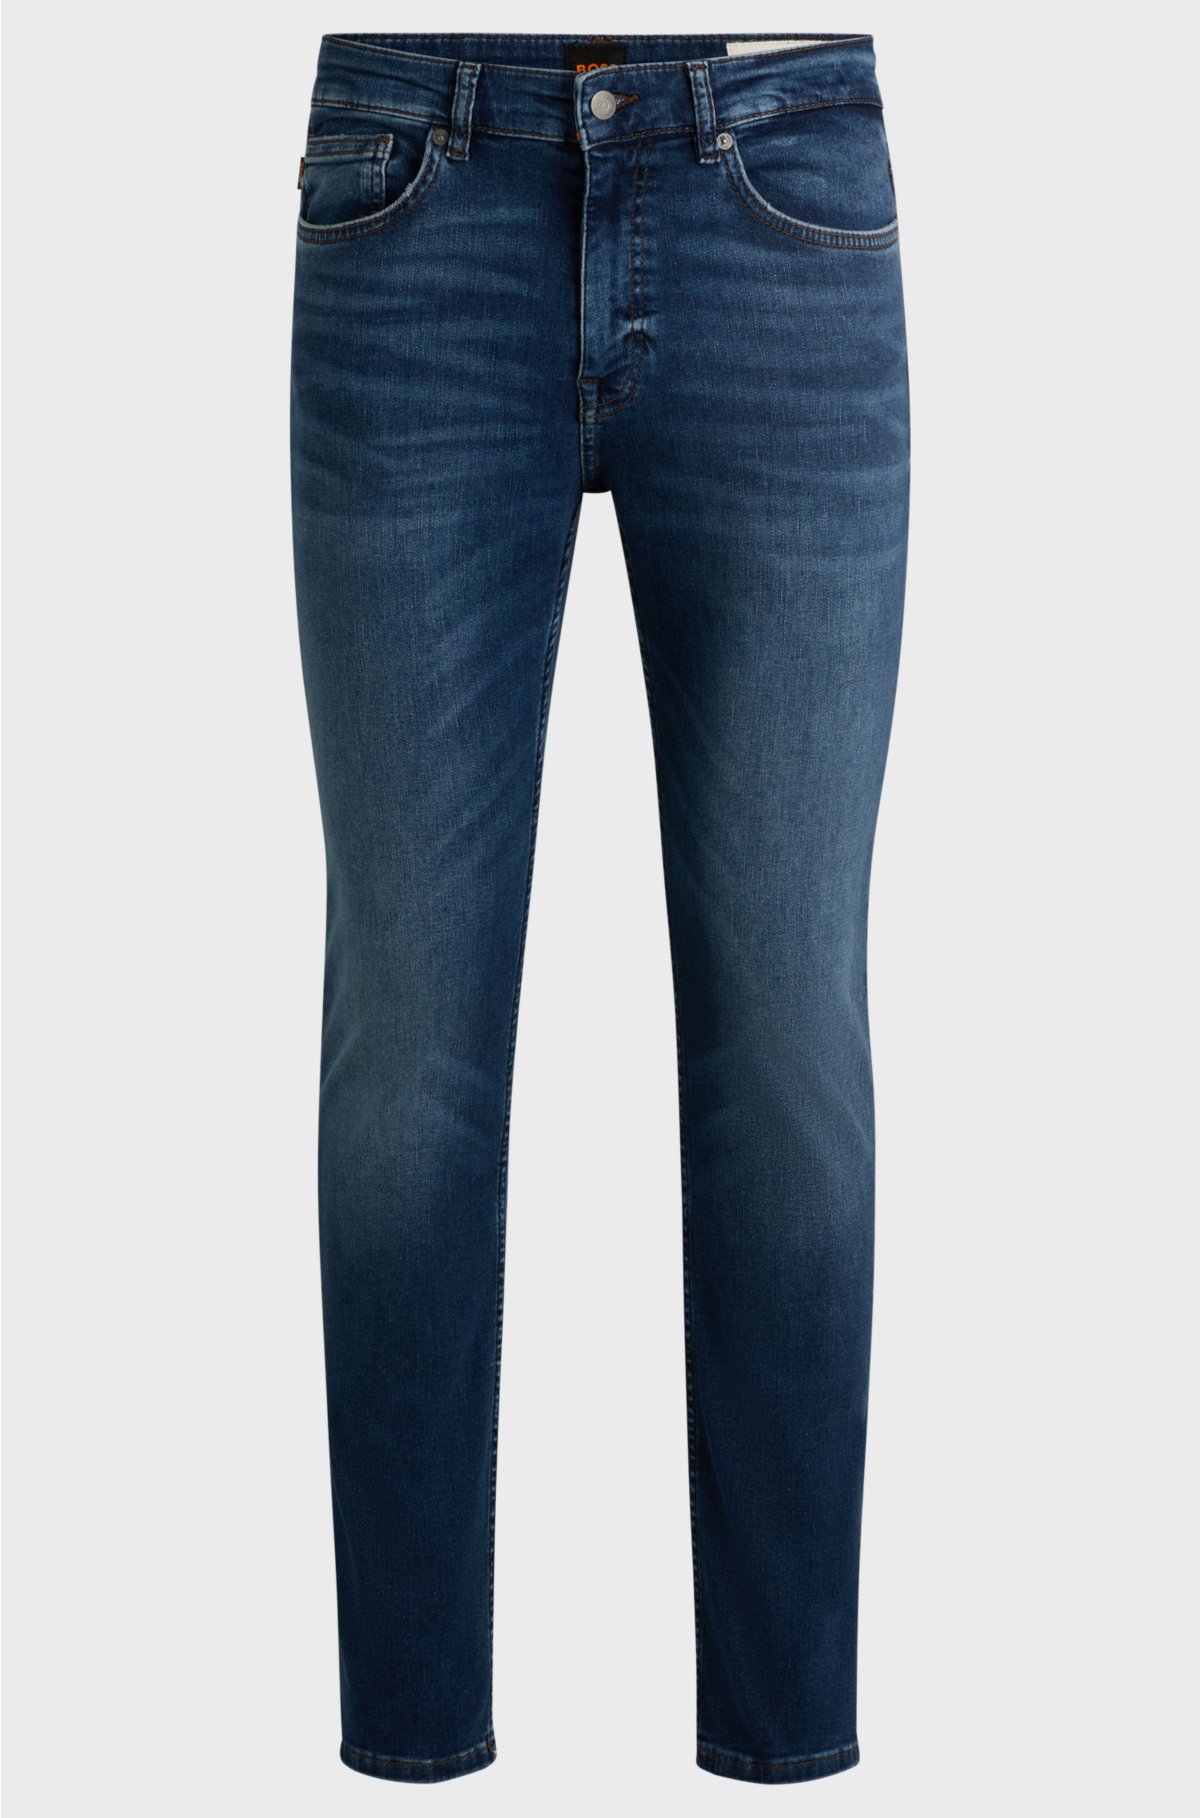 Delaware Slim-fit jeans in red-cast denim, Dark Blue